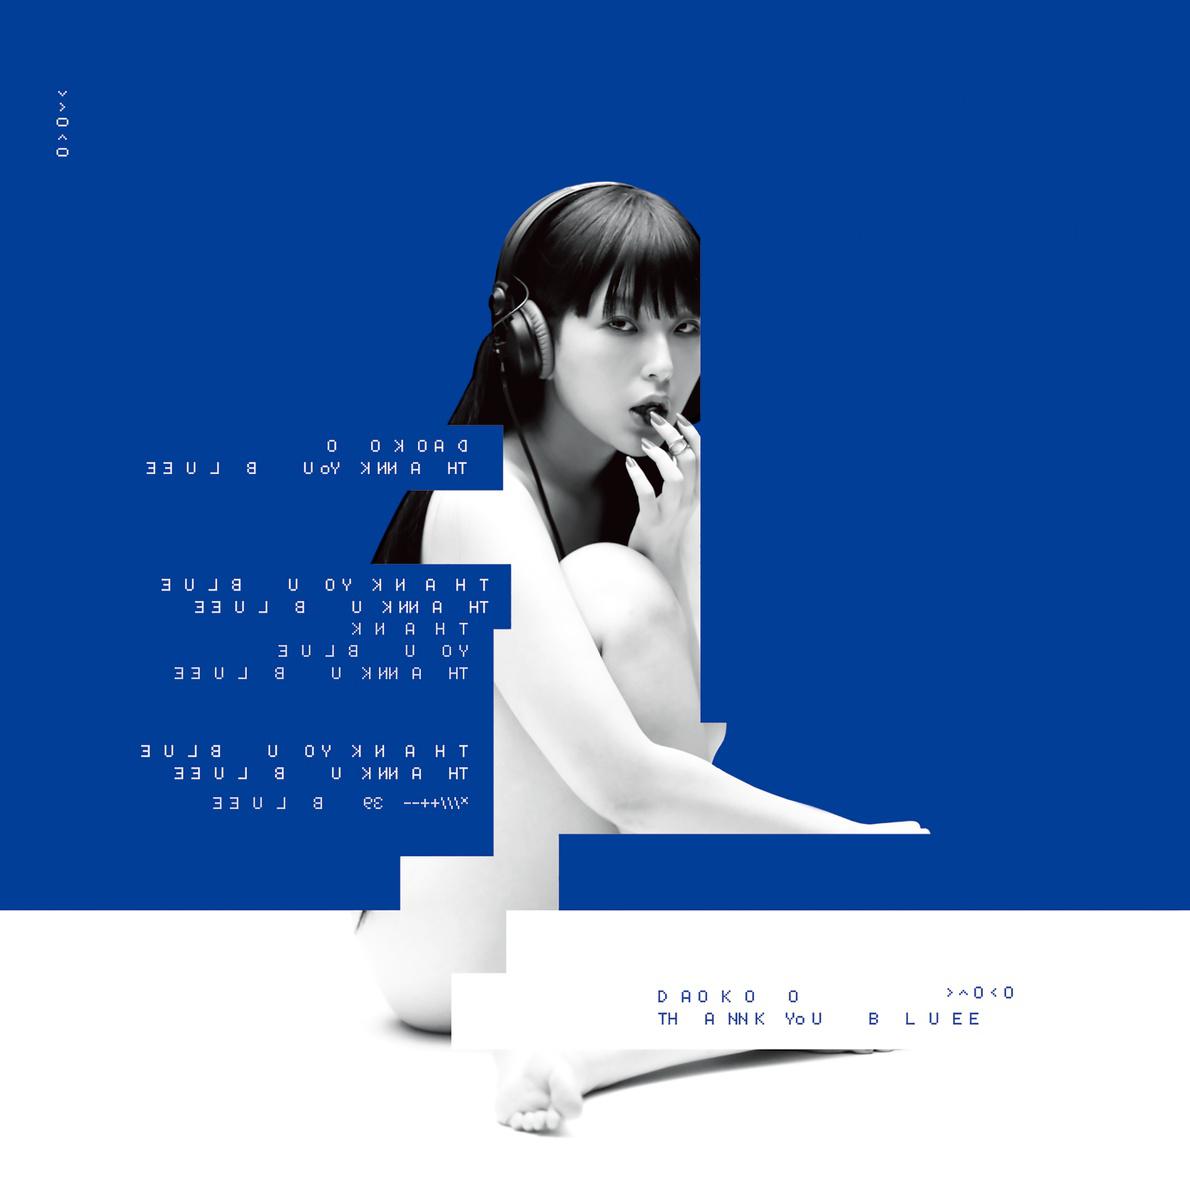 BANG!歌词 歌手Daoko-专辑THANK YOU BLUE-单曲《BANG!》LRC歌词下载